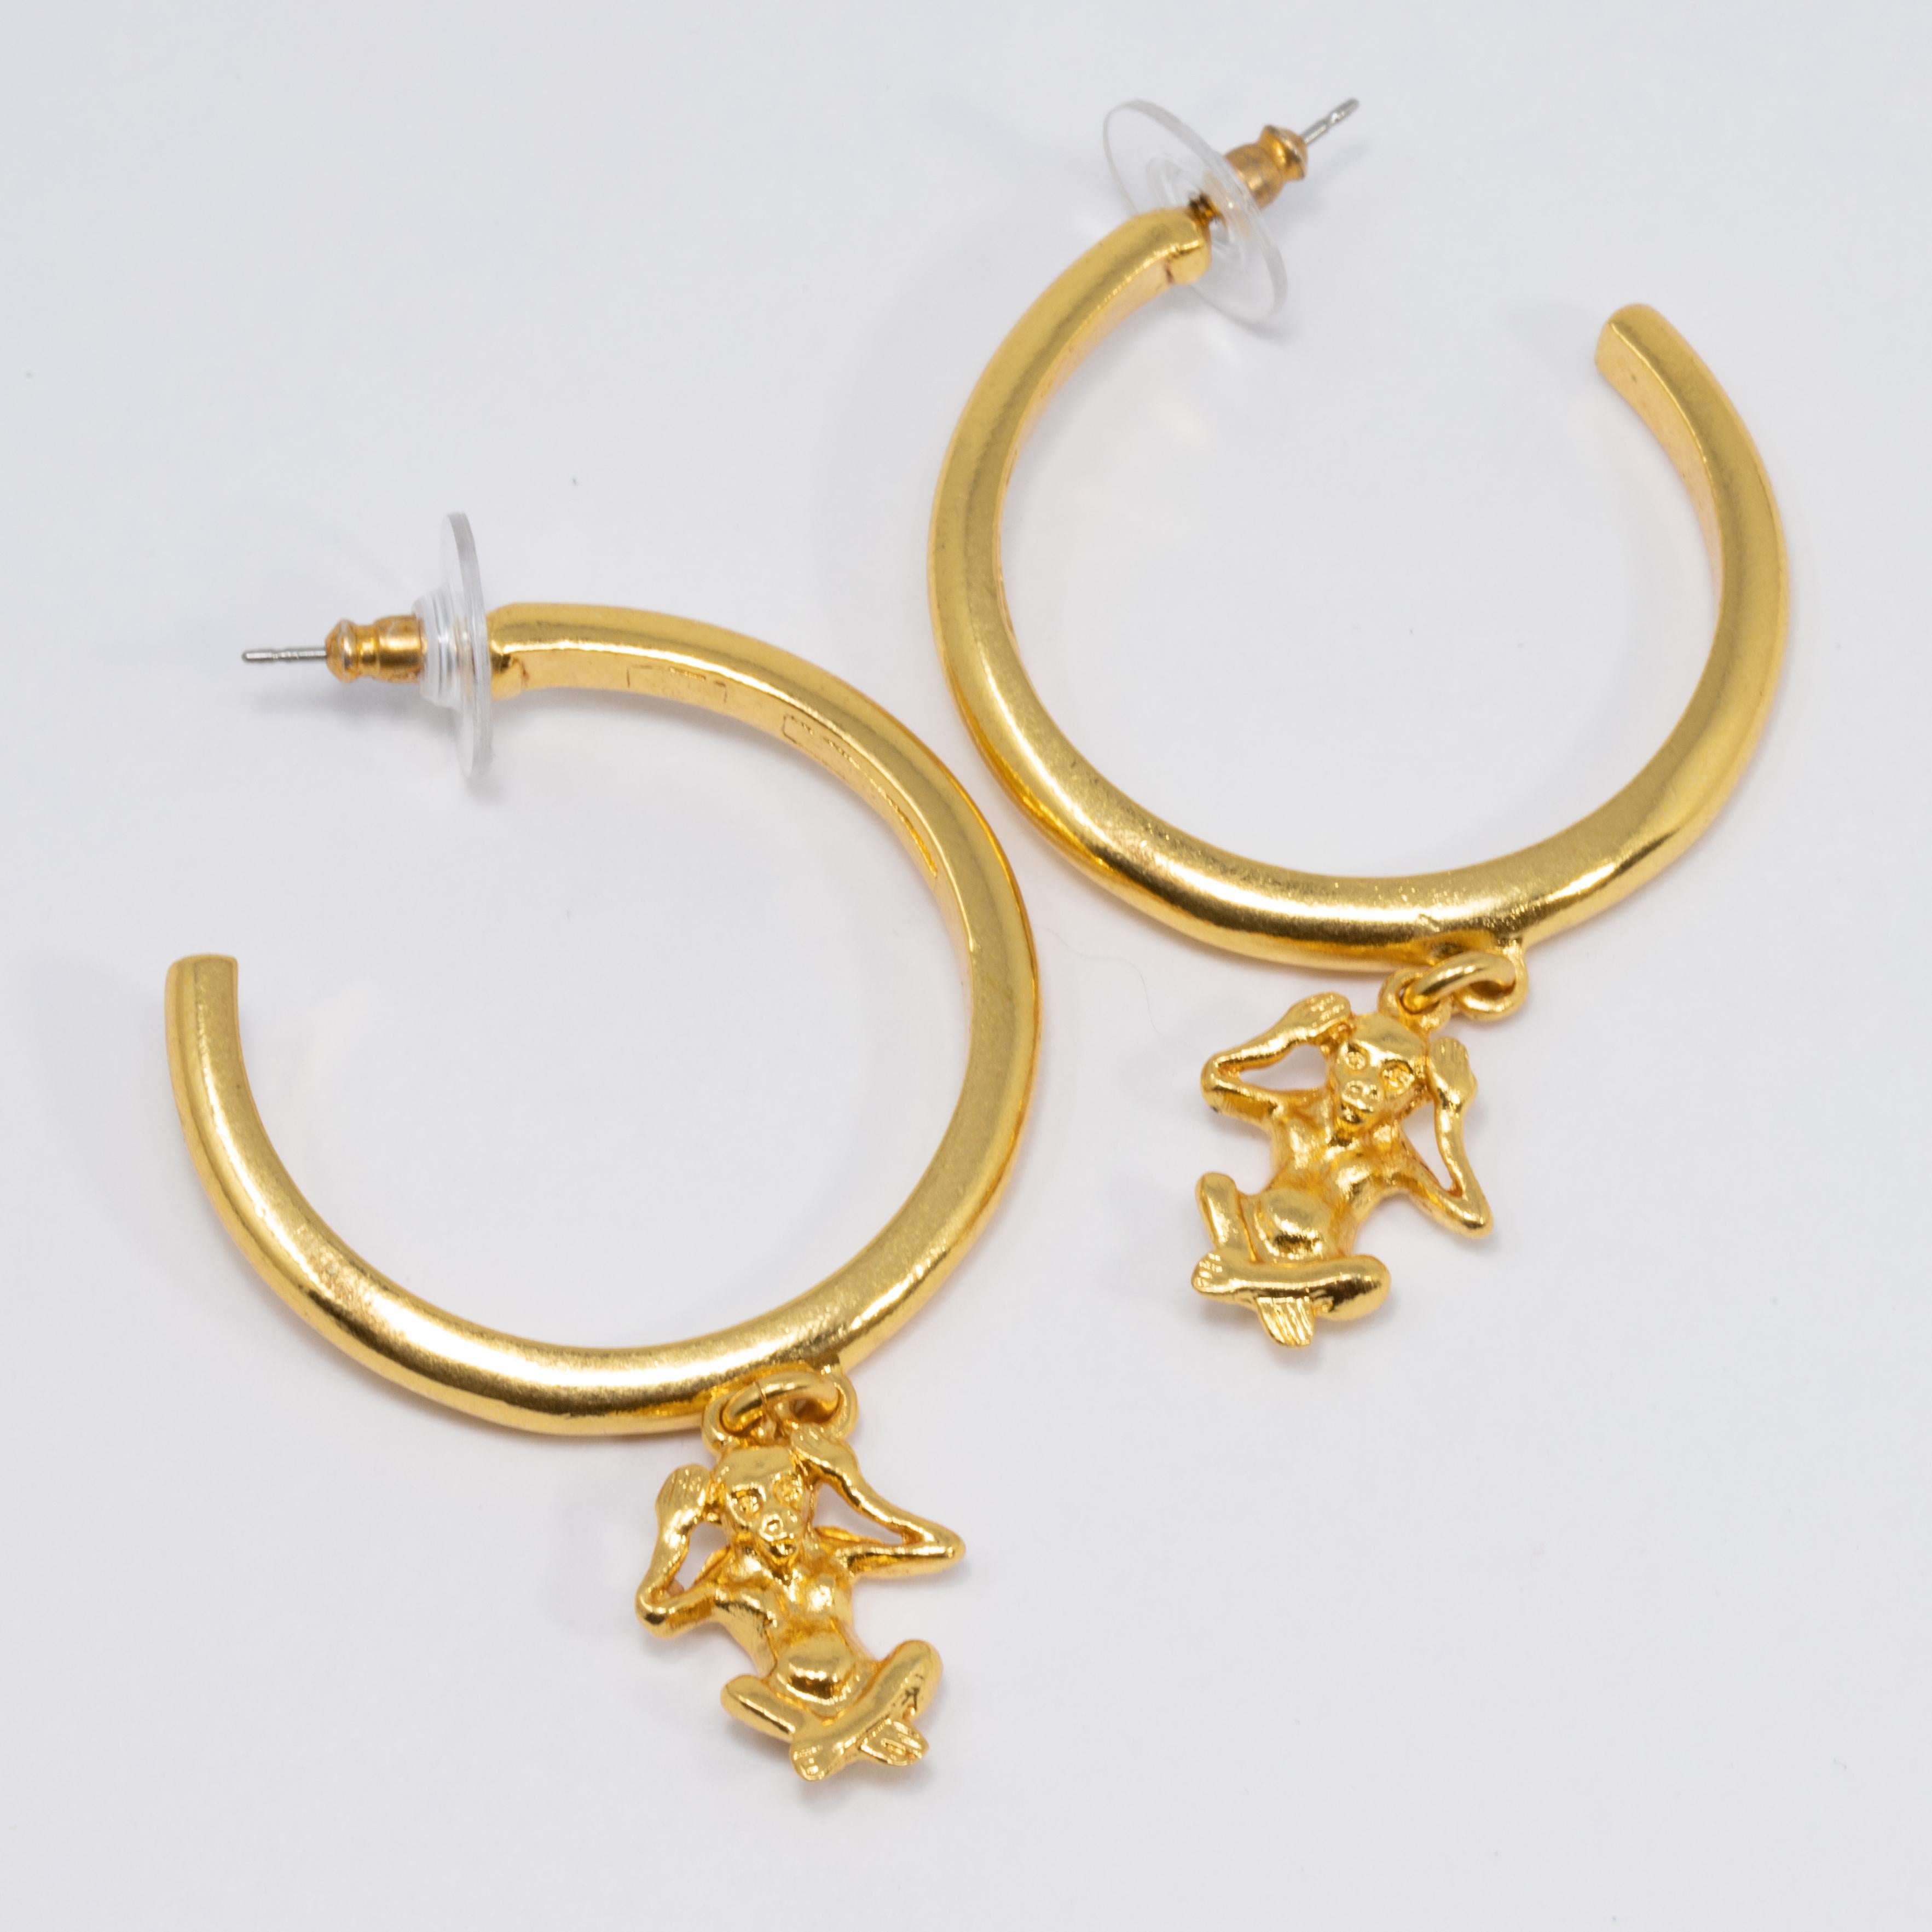 A bold and bright pair of open hoop earrings by Oscar de la Renta. Each earring features a dangling 